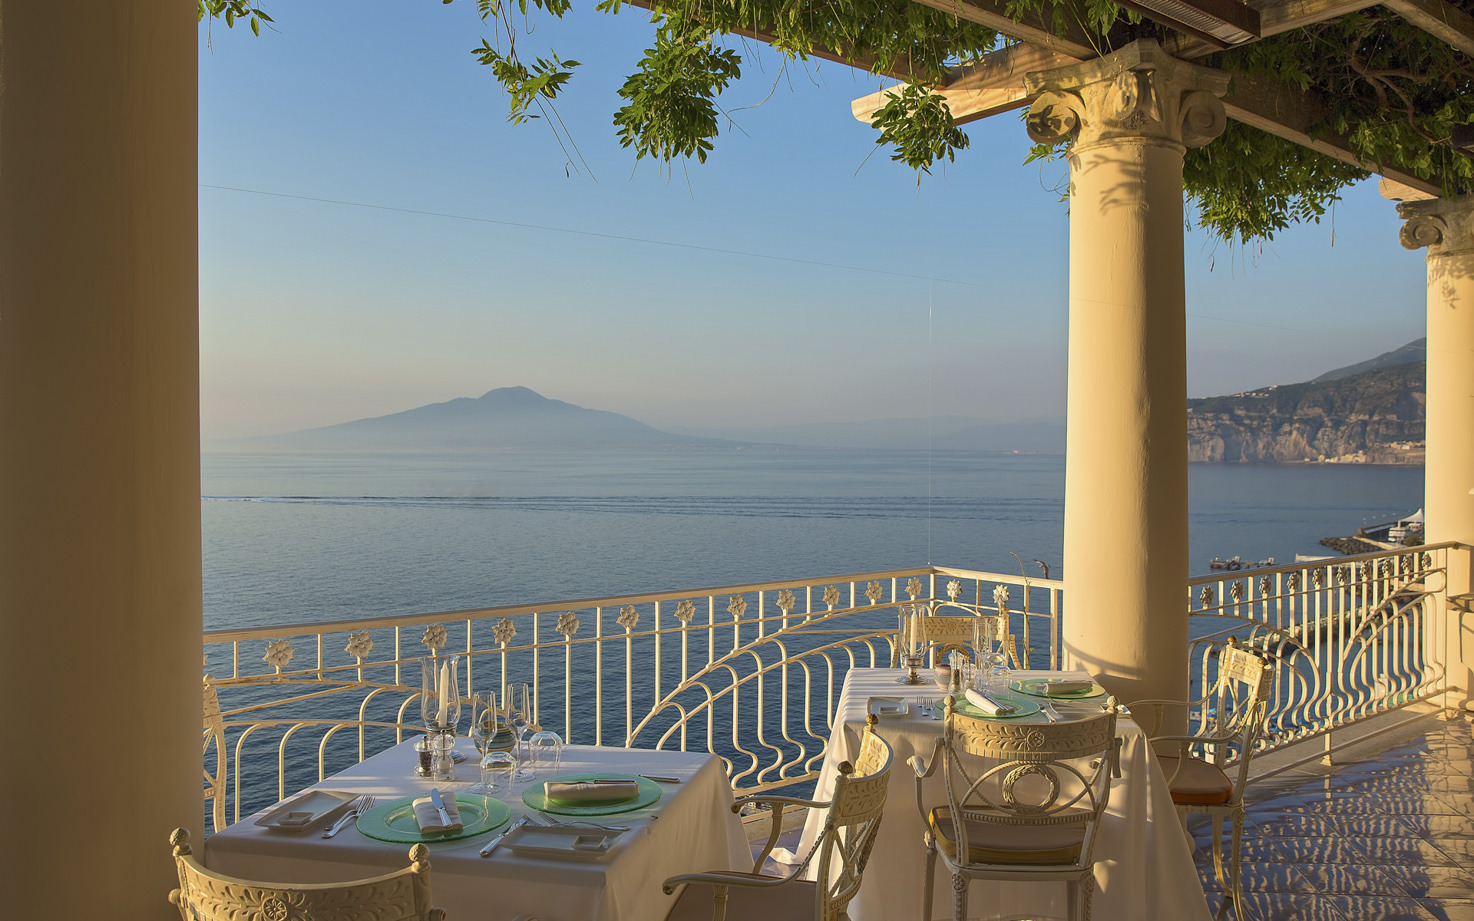 Terrace restaurant with view over Mt. Vesuvius